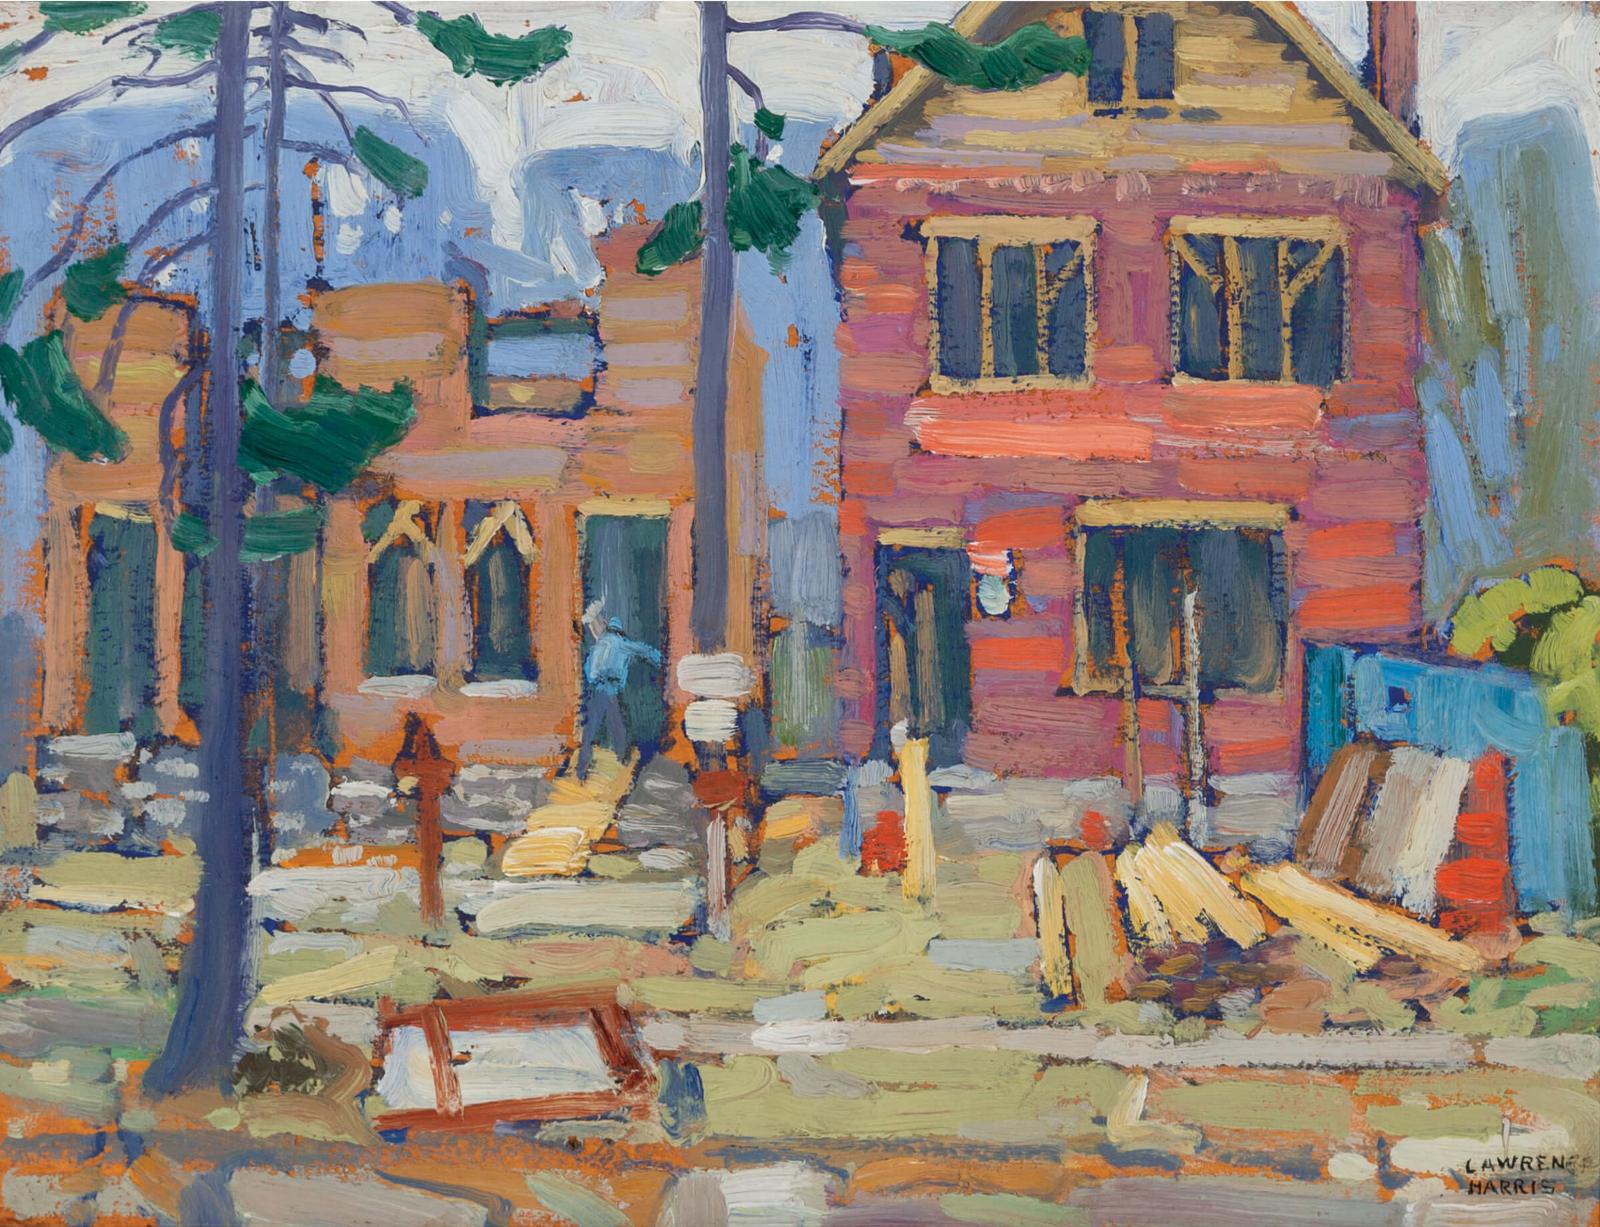 Lawren Stewart Harris (1885-1970) - Houses Under Construction